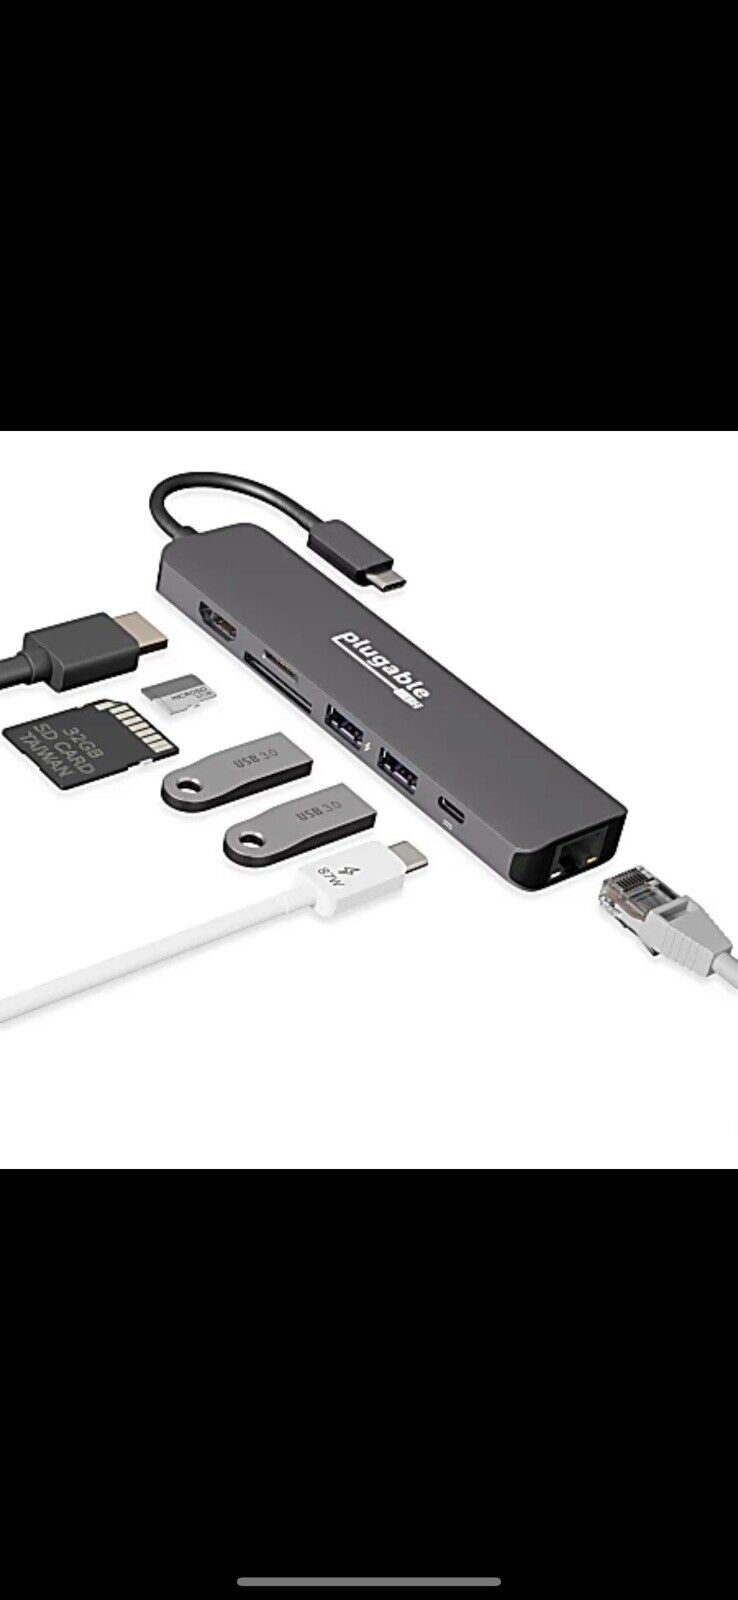 Plugable USB-C Hub 7-in-1, USB C Hub Compatible with Mac, Windows, Chromebook